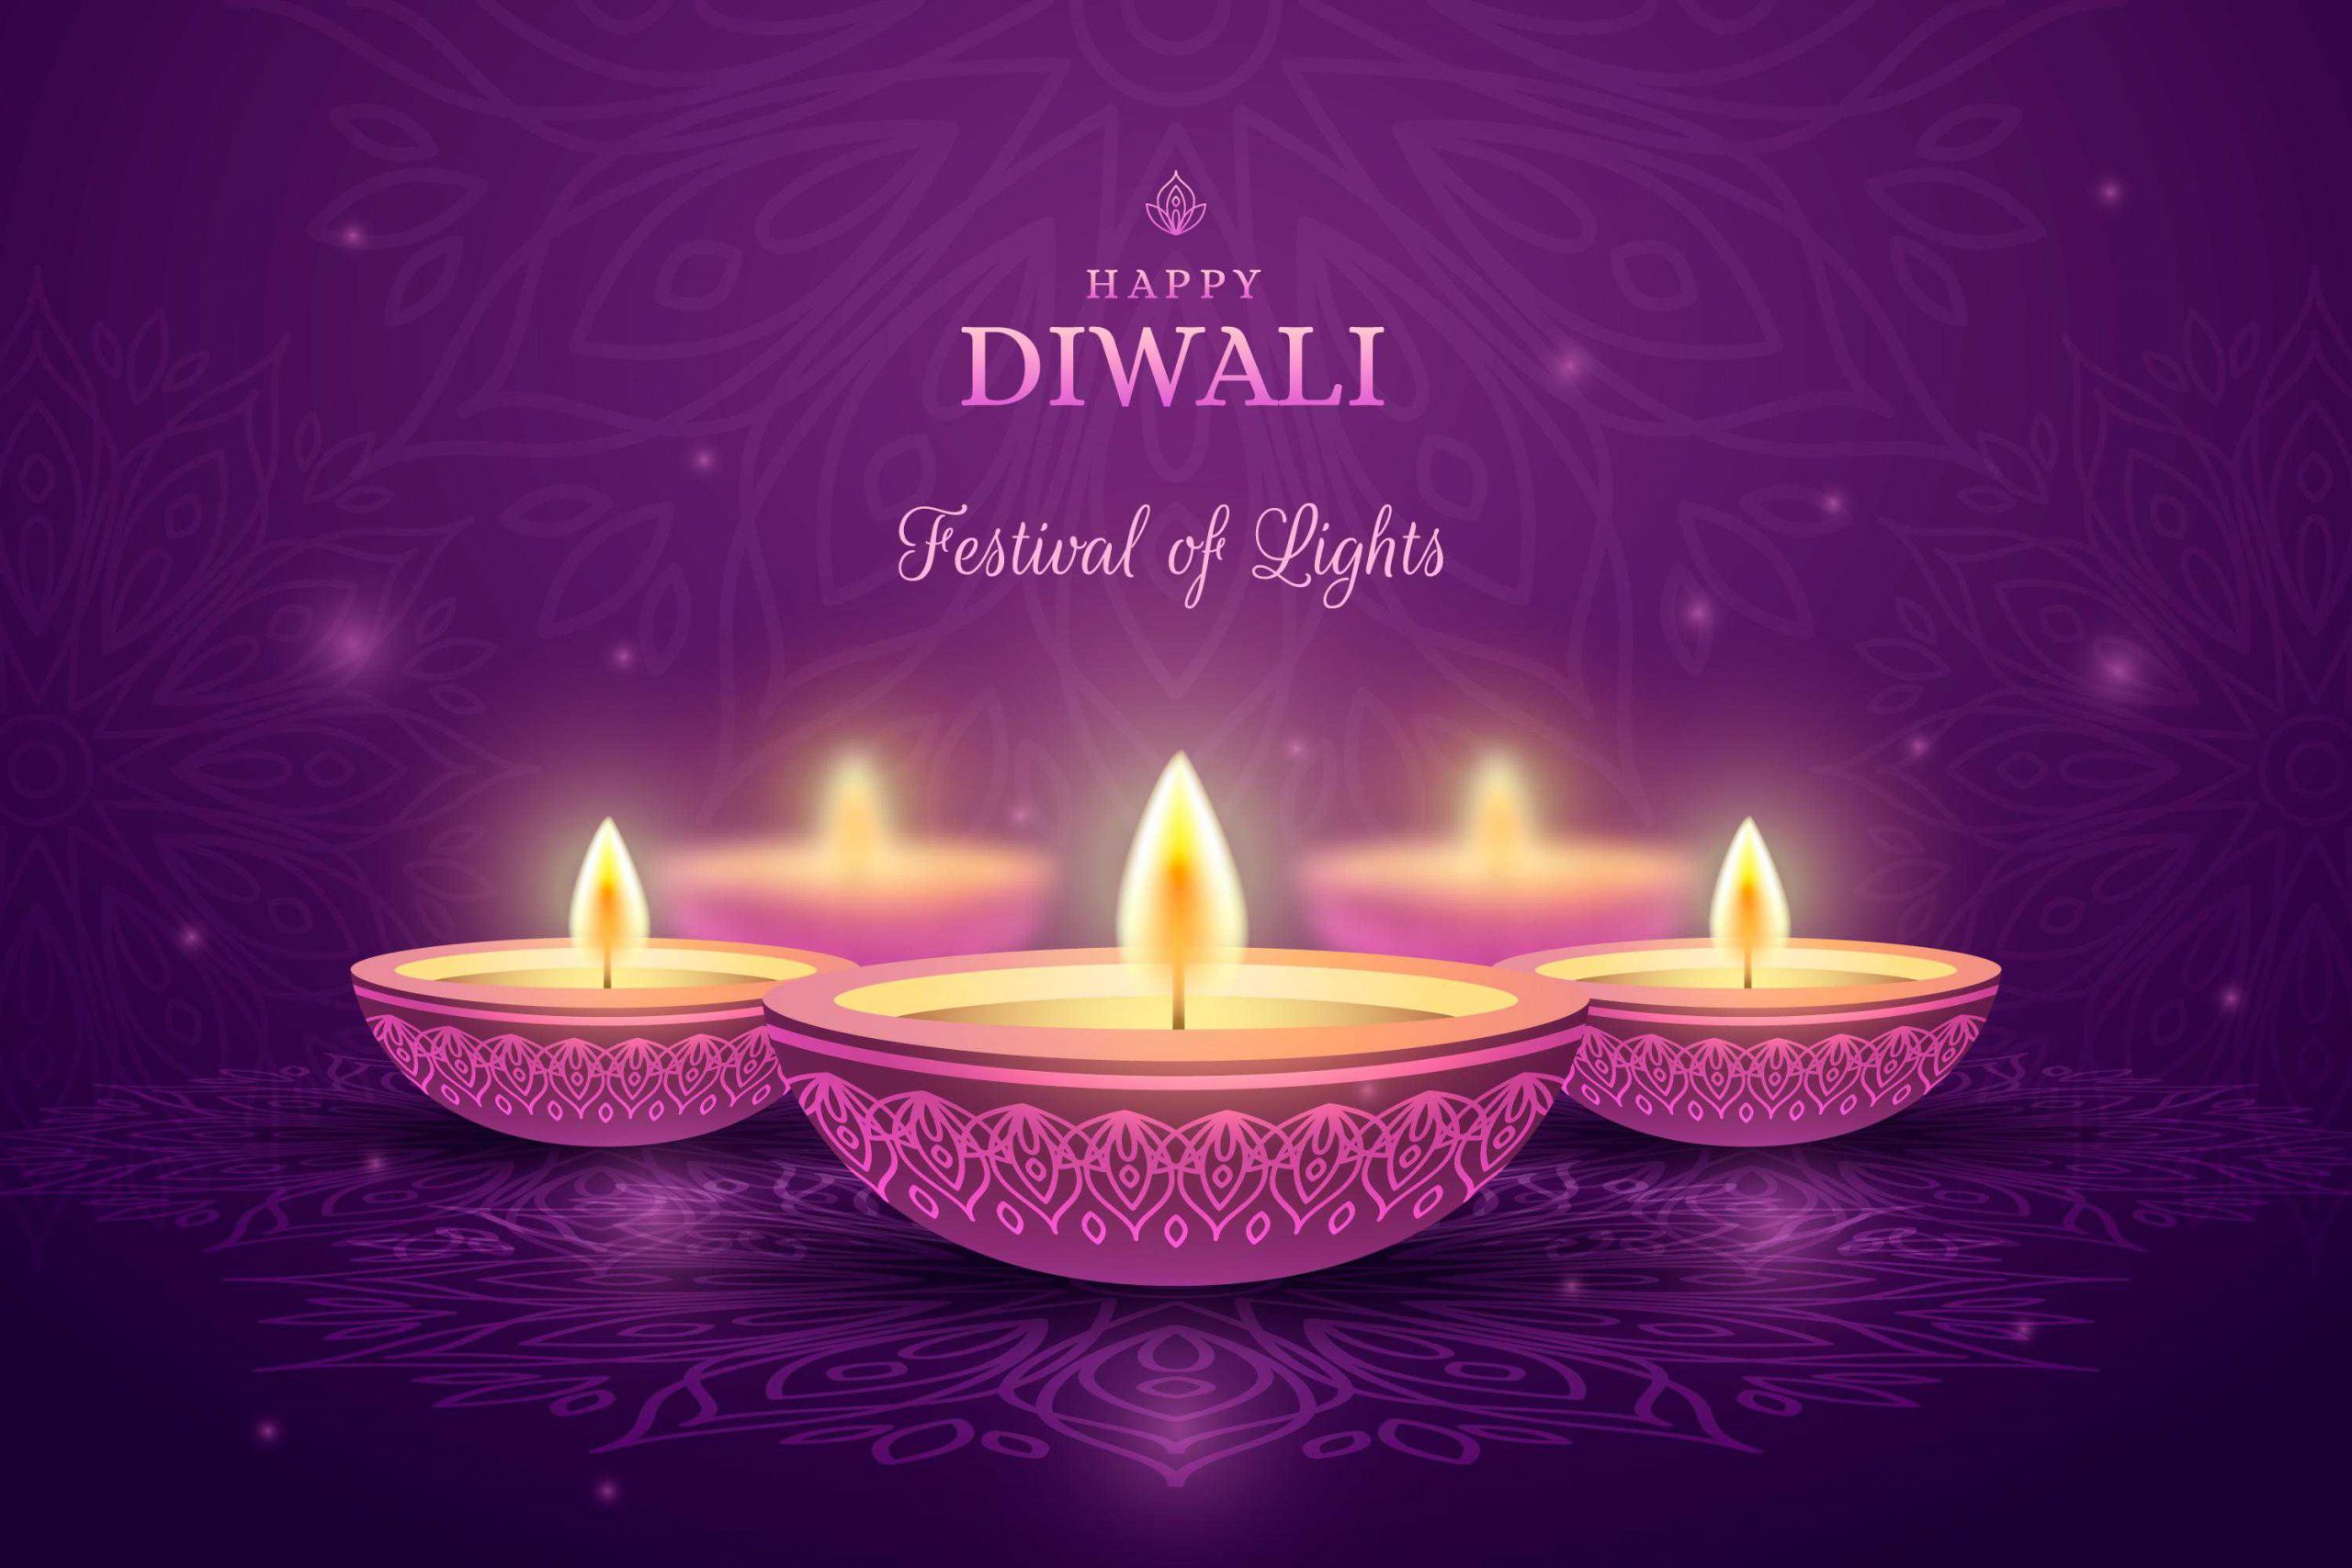 Happy Diwali pictures download 